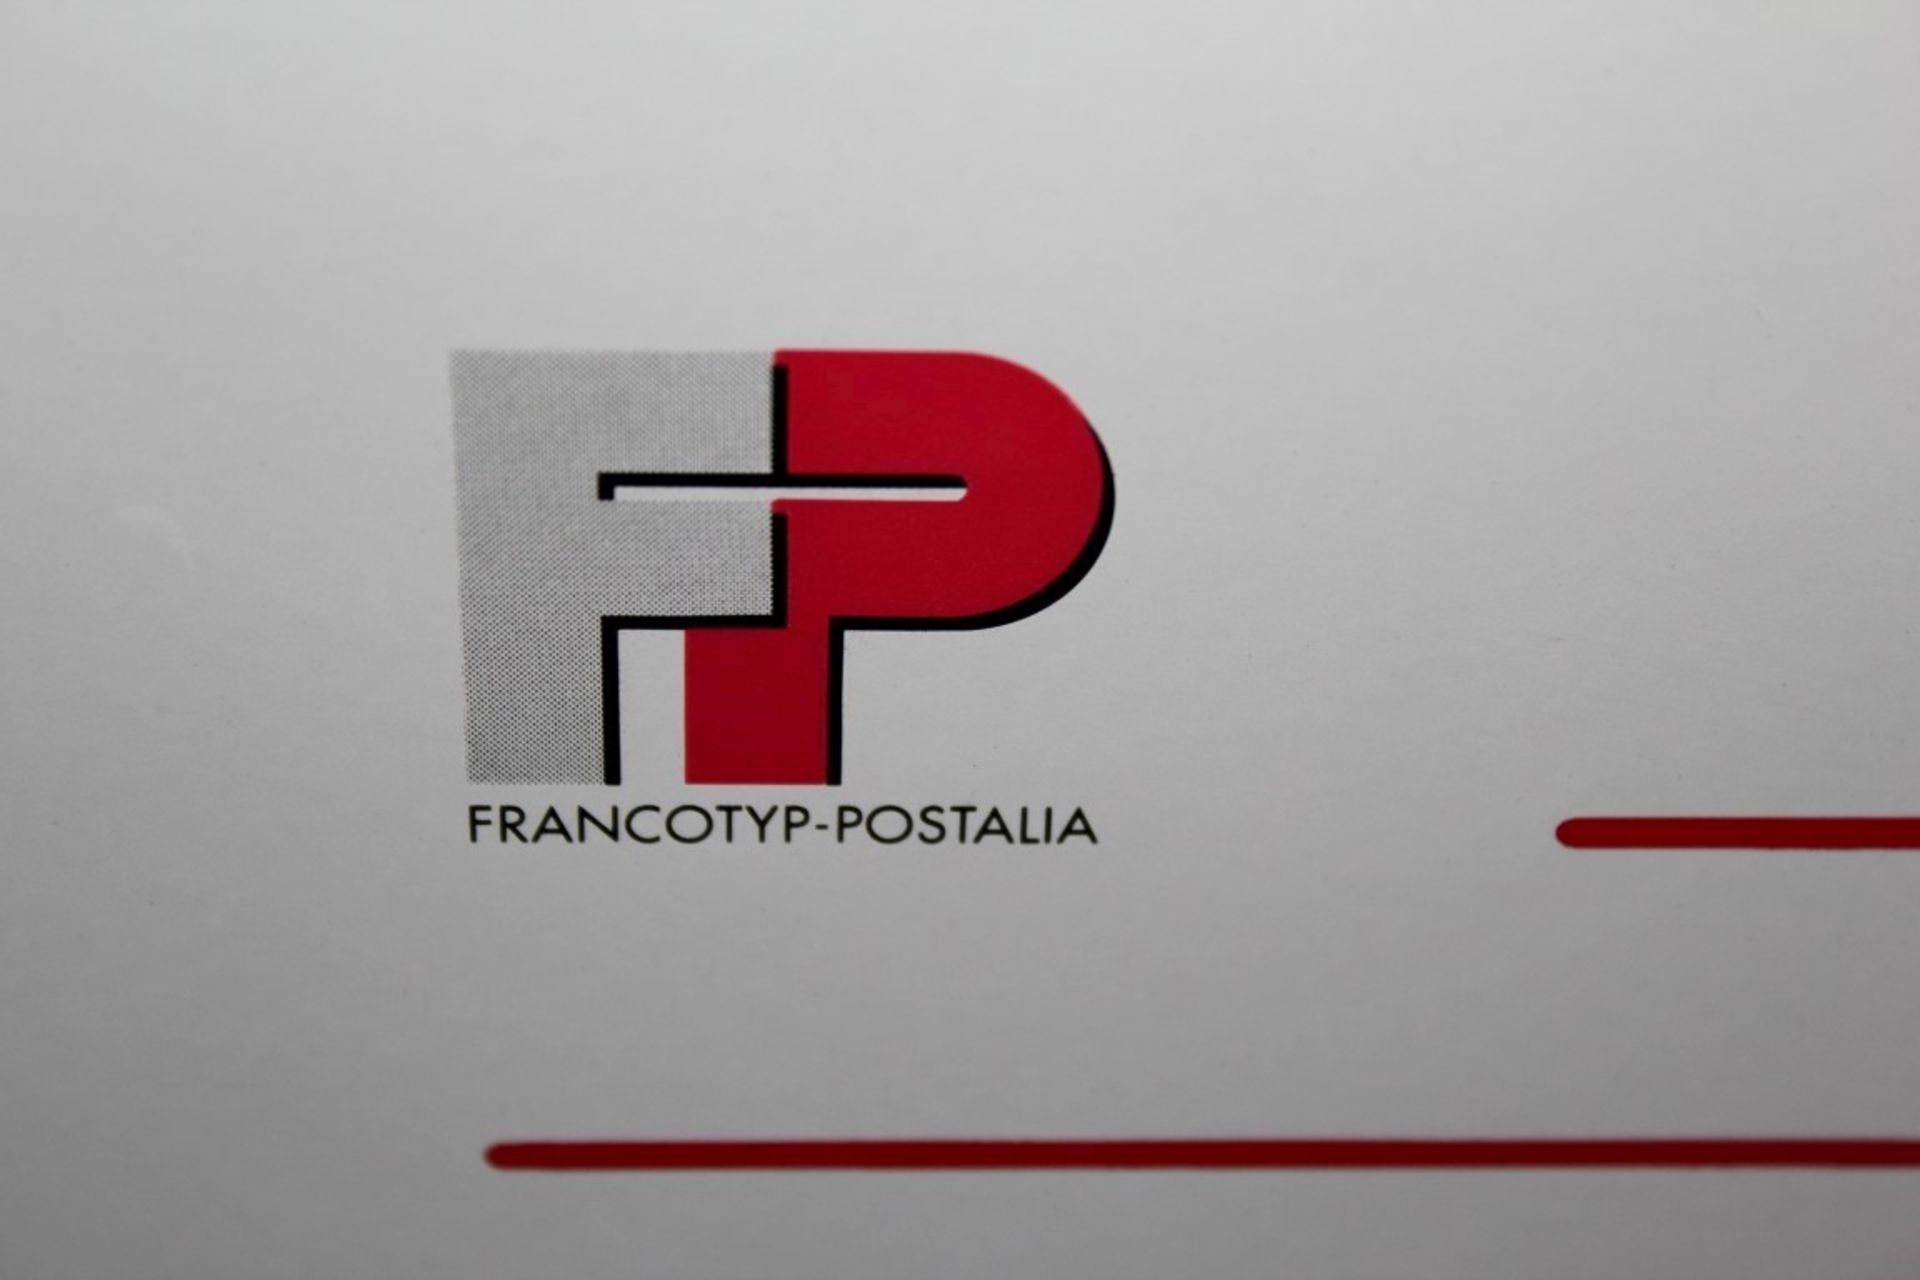 1 x Francotyp-Postalia Franking Machine - Sold As Seen - CL011 - Location: Altrincham WA14 Item - Image 4 of 6